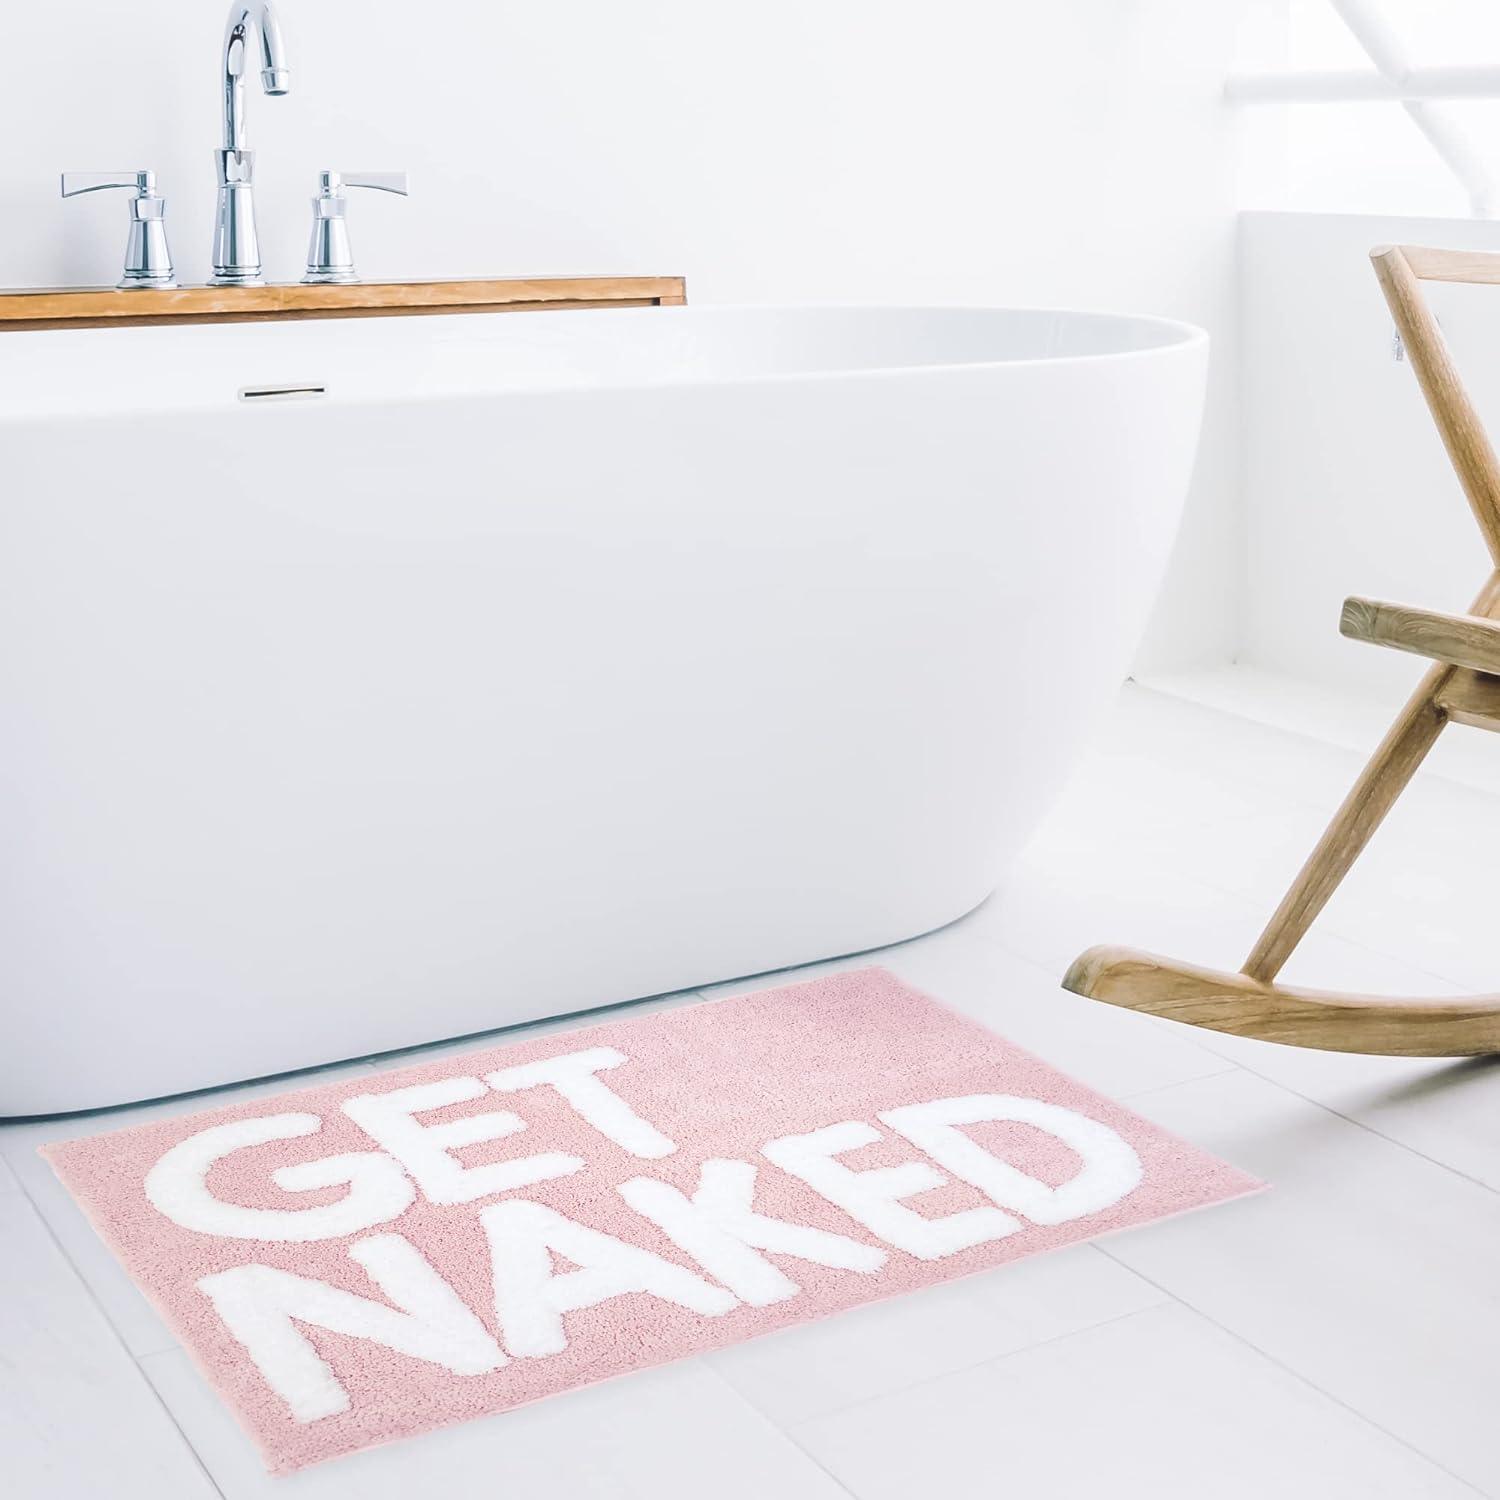 Alfombra de baño rosa con texto en inglés Get Naked, color rosa rubor, - VIRTUAL MUEBLES